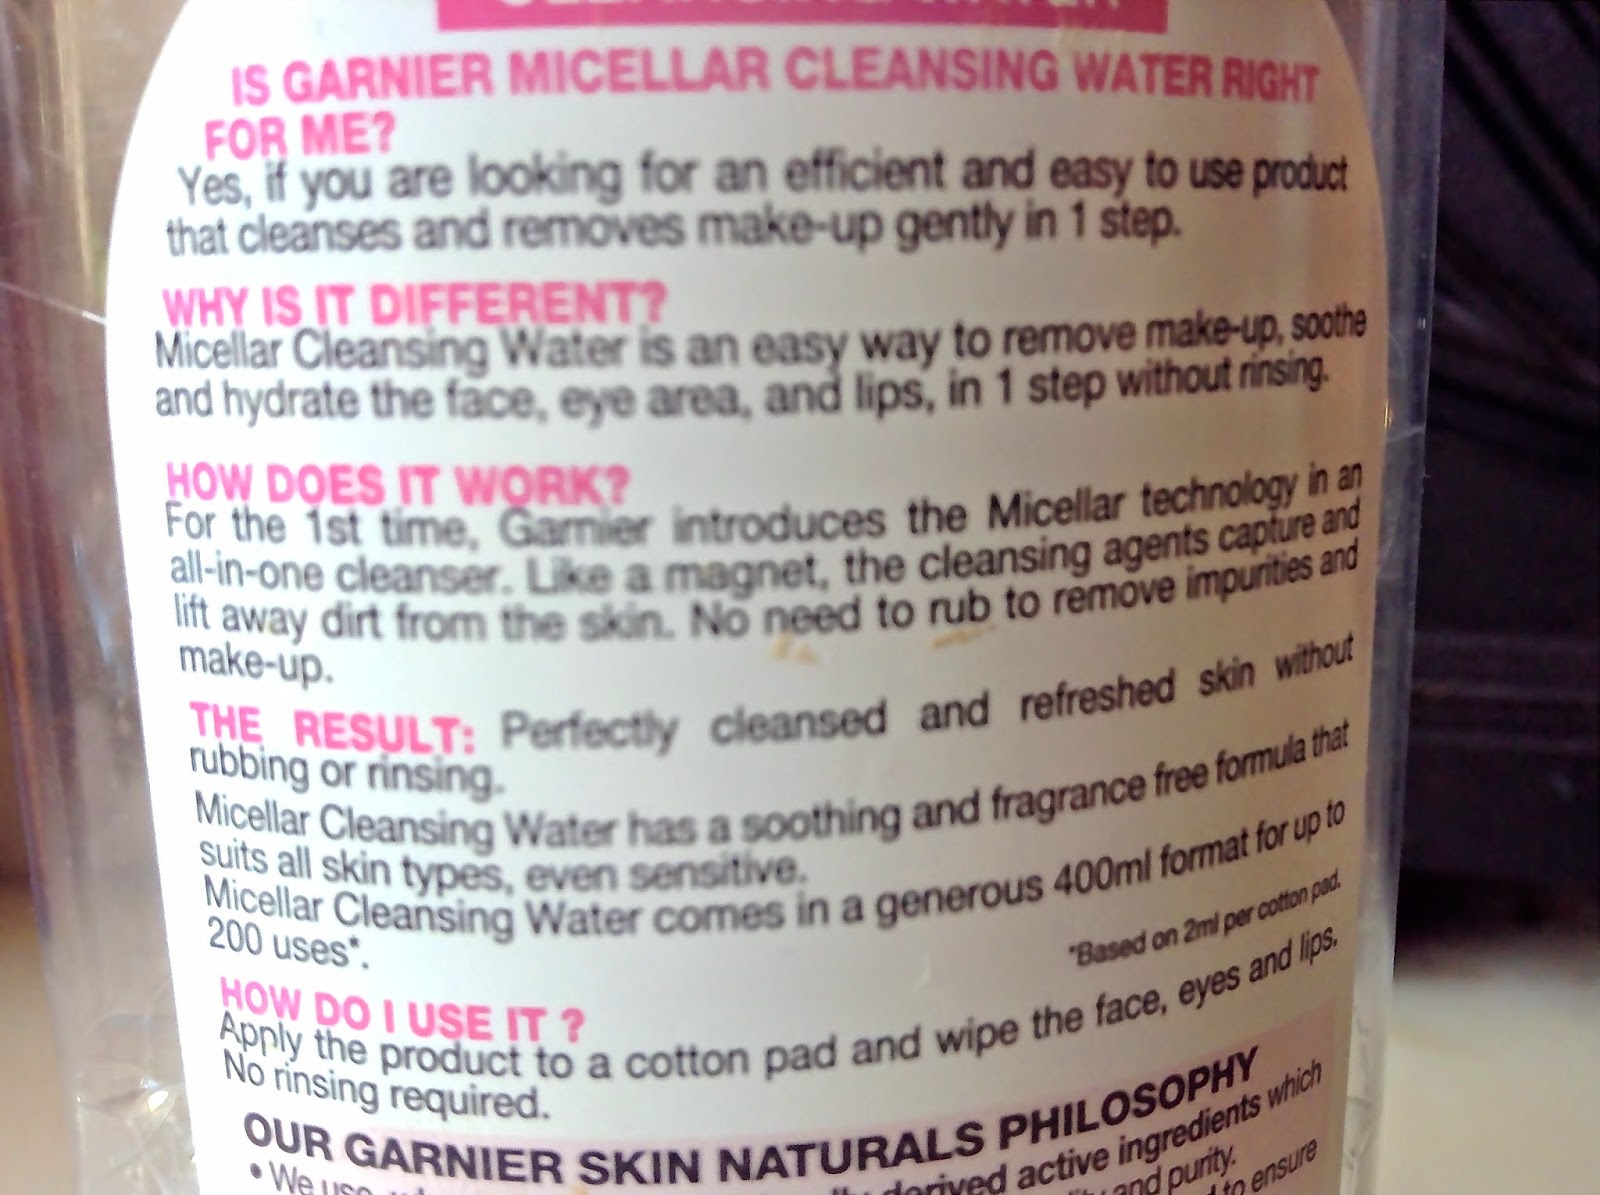 garnier micellar water review